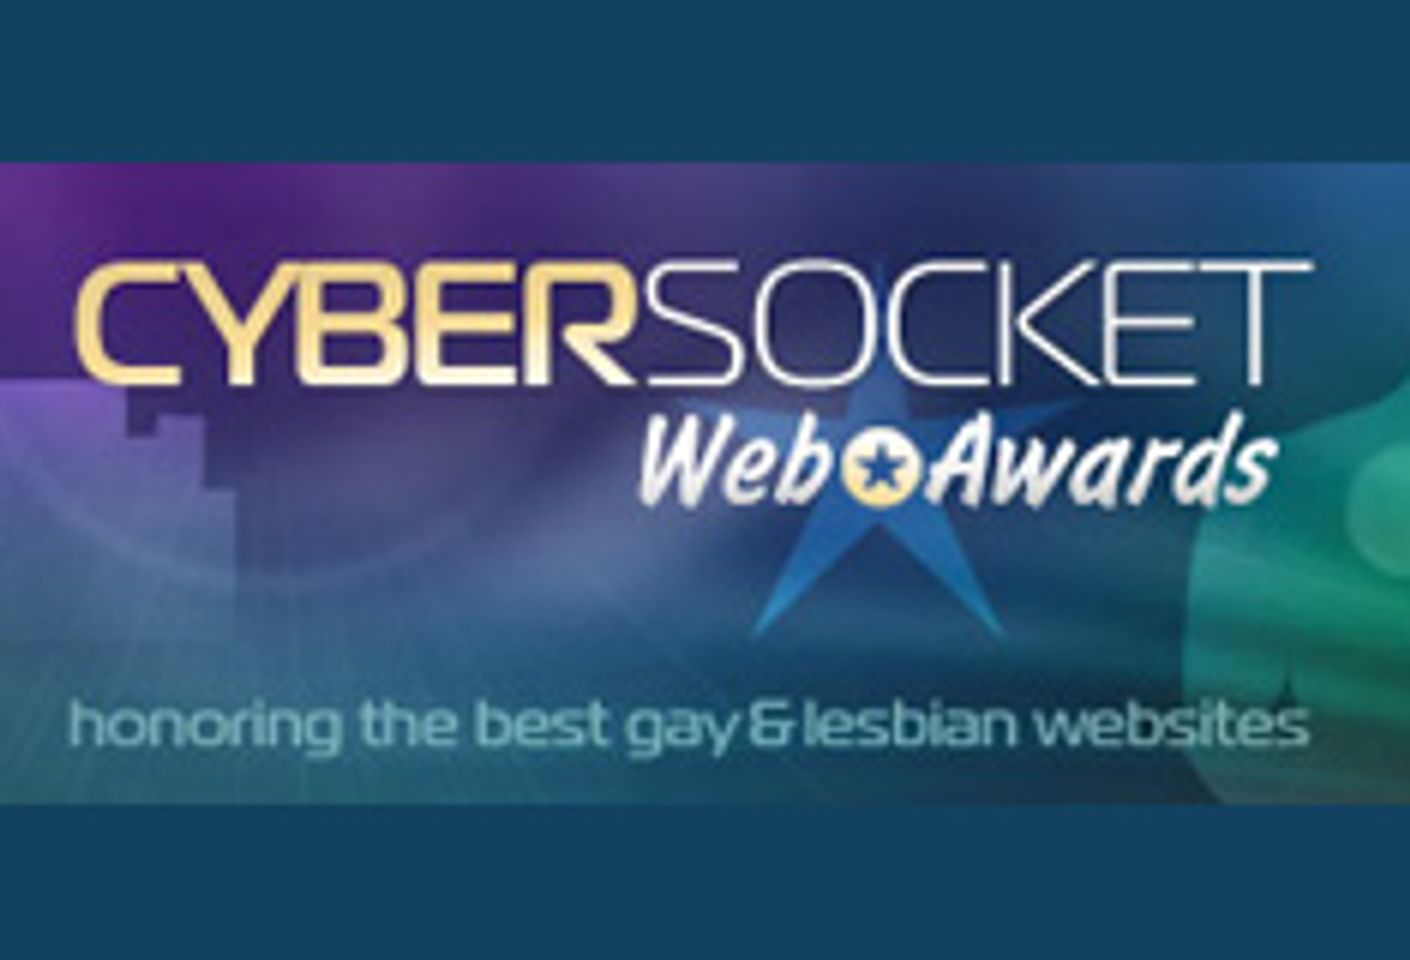 15th Annual Cybersocket Web Awards Winners Announced